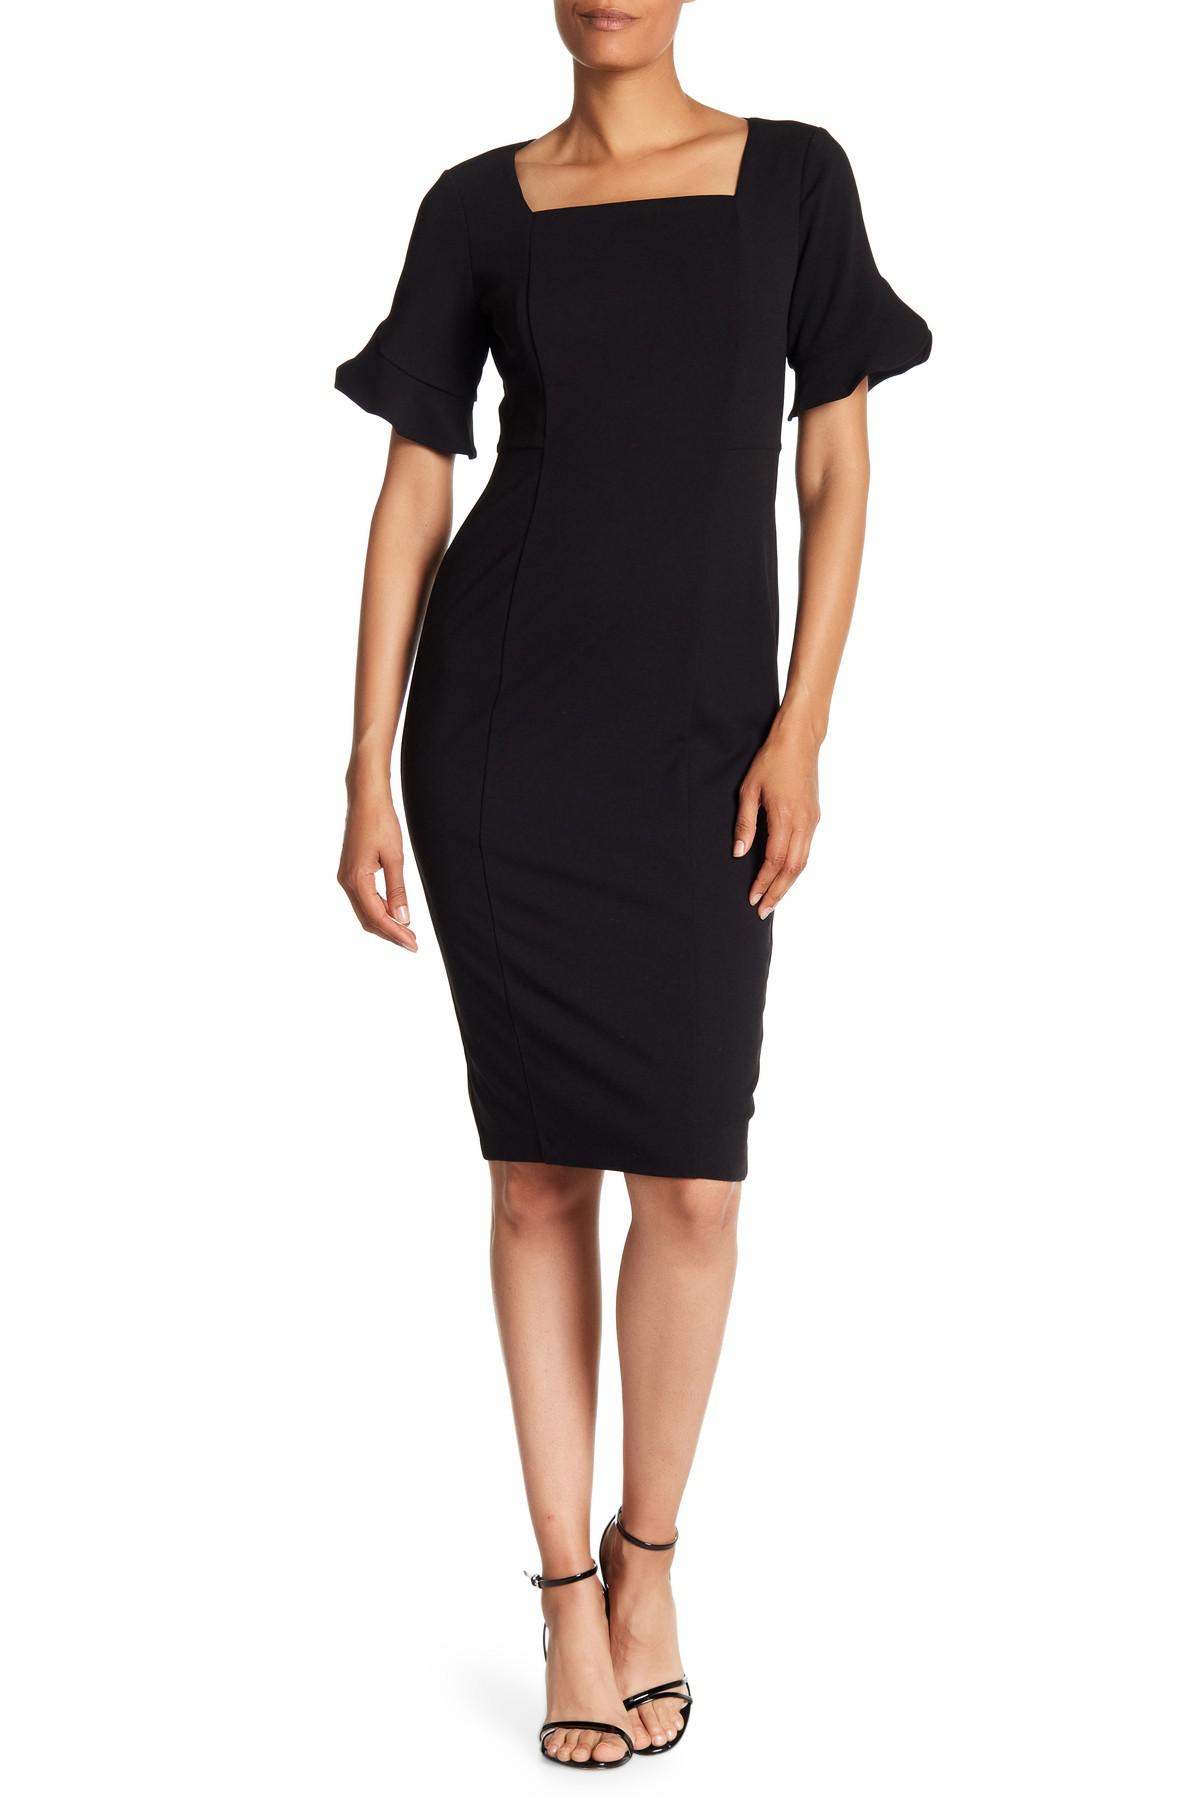 Donna Morgan Synthetic Ruffle Sleeve Sheath Dress in Black - Lyst